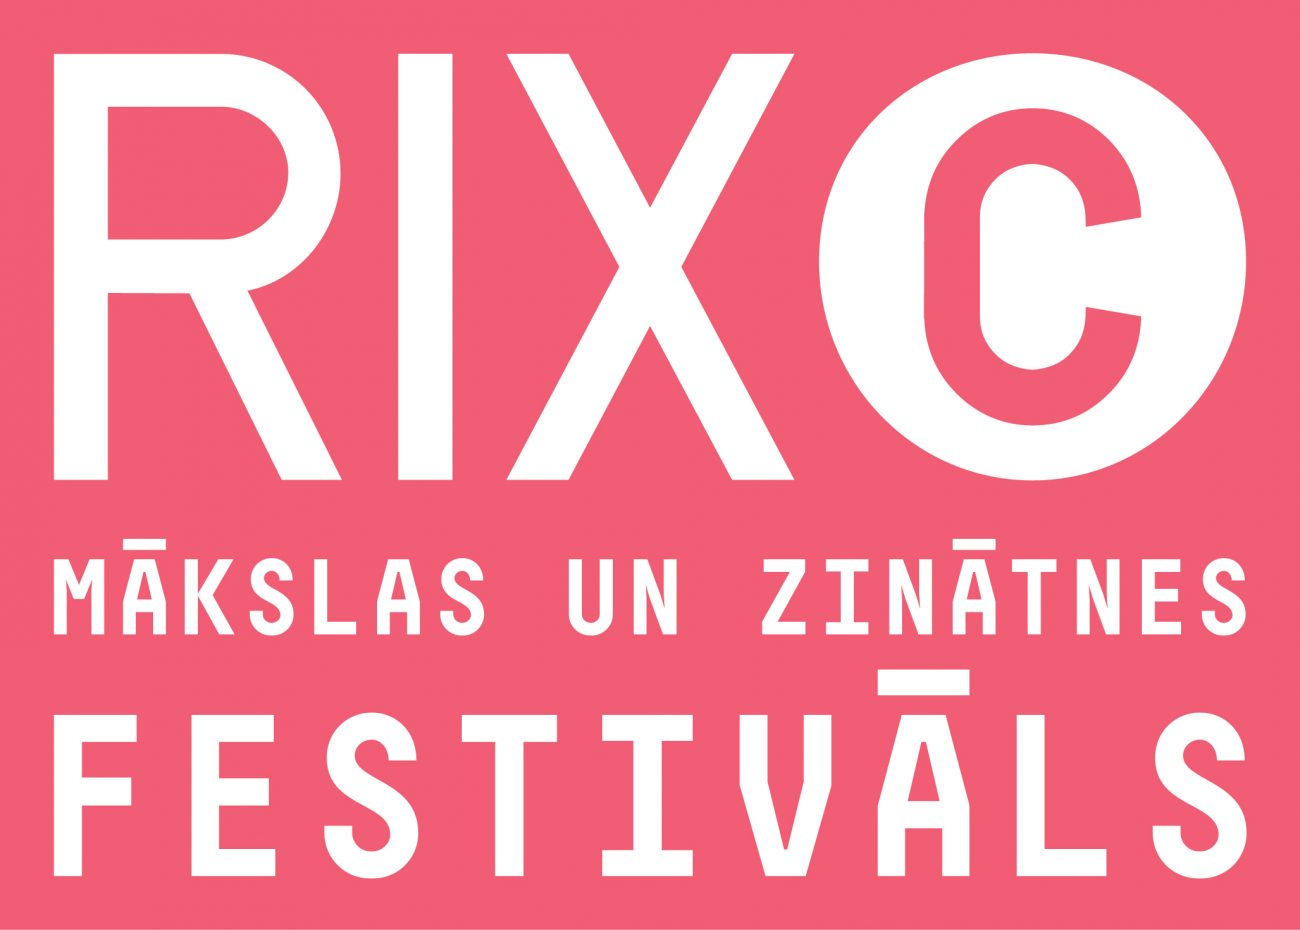 RIXC_makslasunzinatnesfestivals_roza